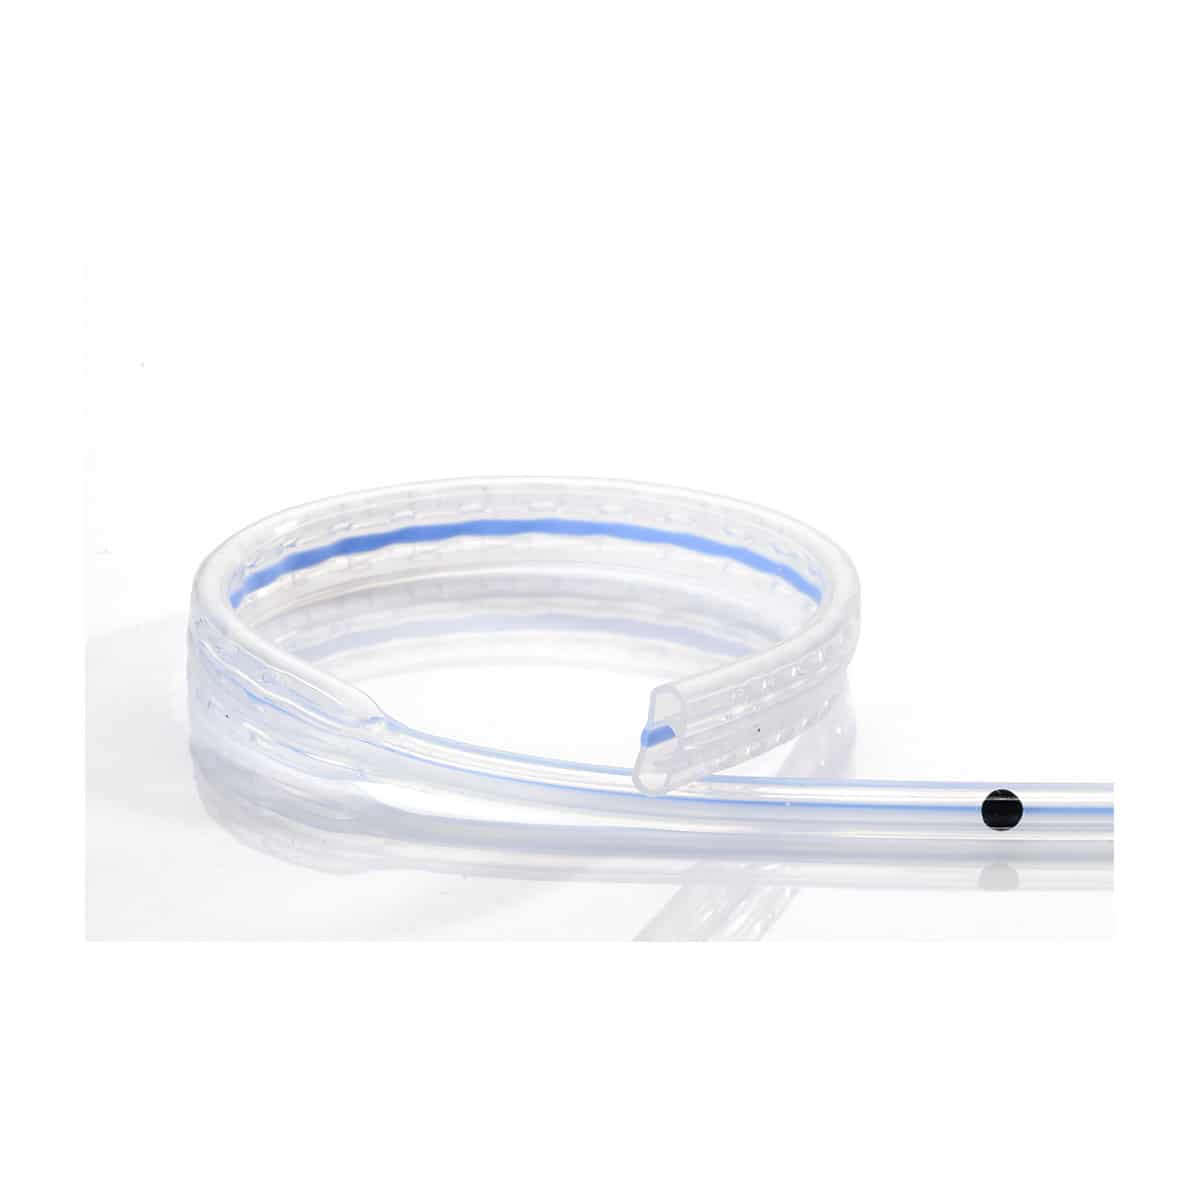 Jackson-Pratt™ Silicone Catheters by Redax - Med Alliance Solutions LLC